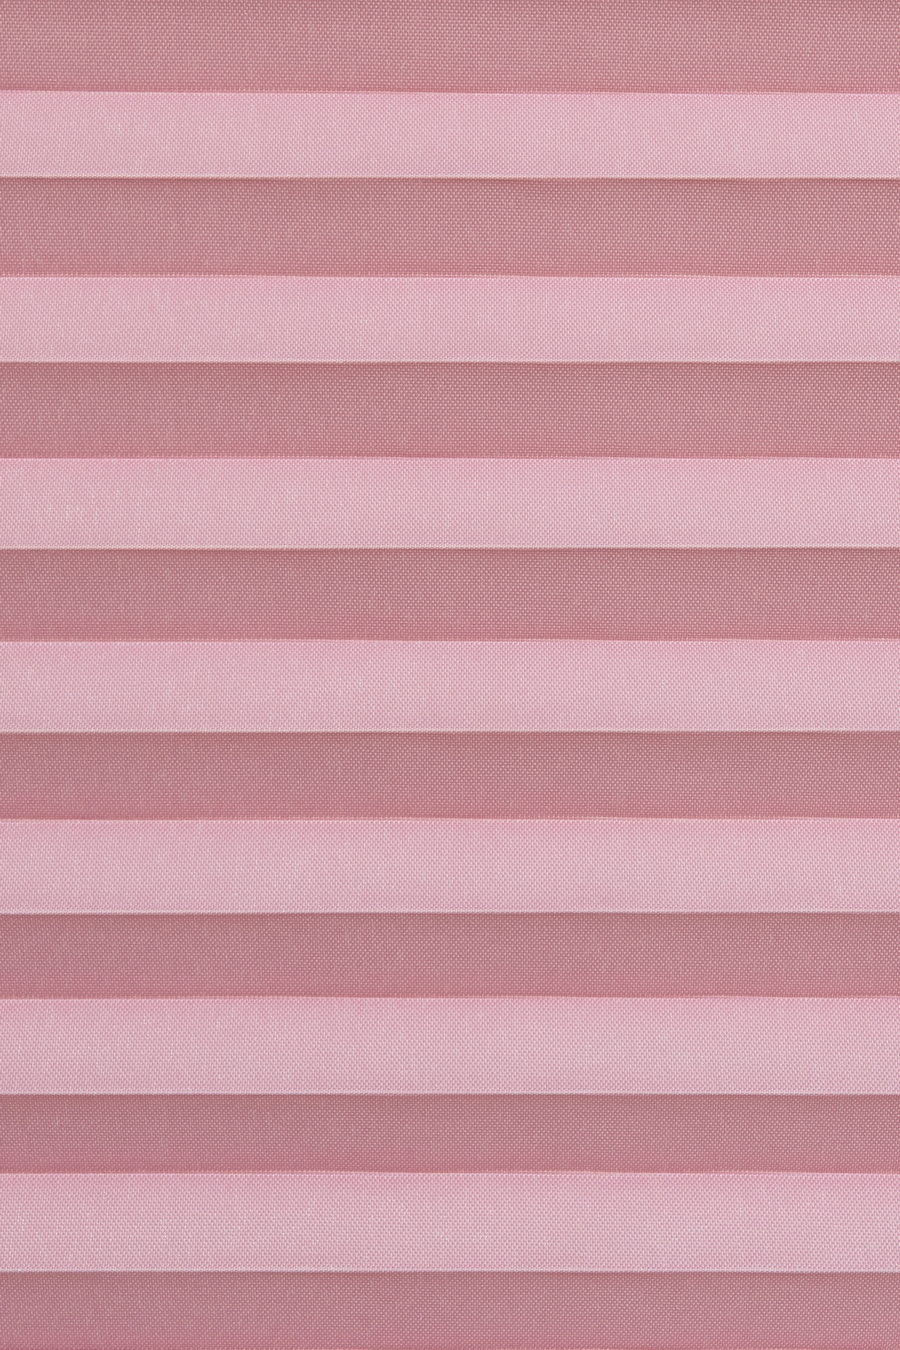 Ткань ALLEGRO PEARL pastel pink 5792 для штор плиссе